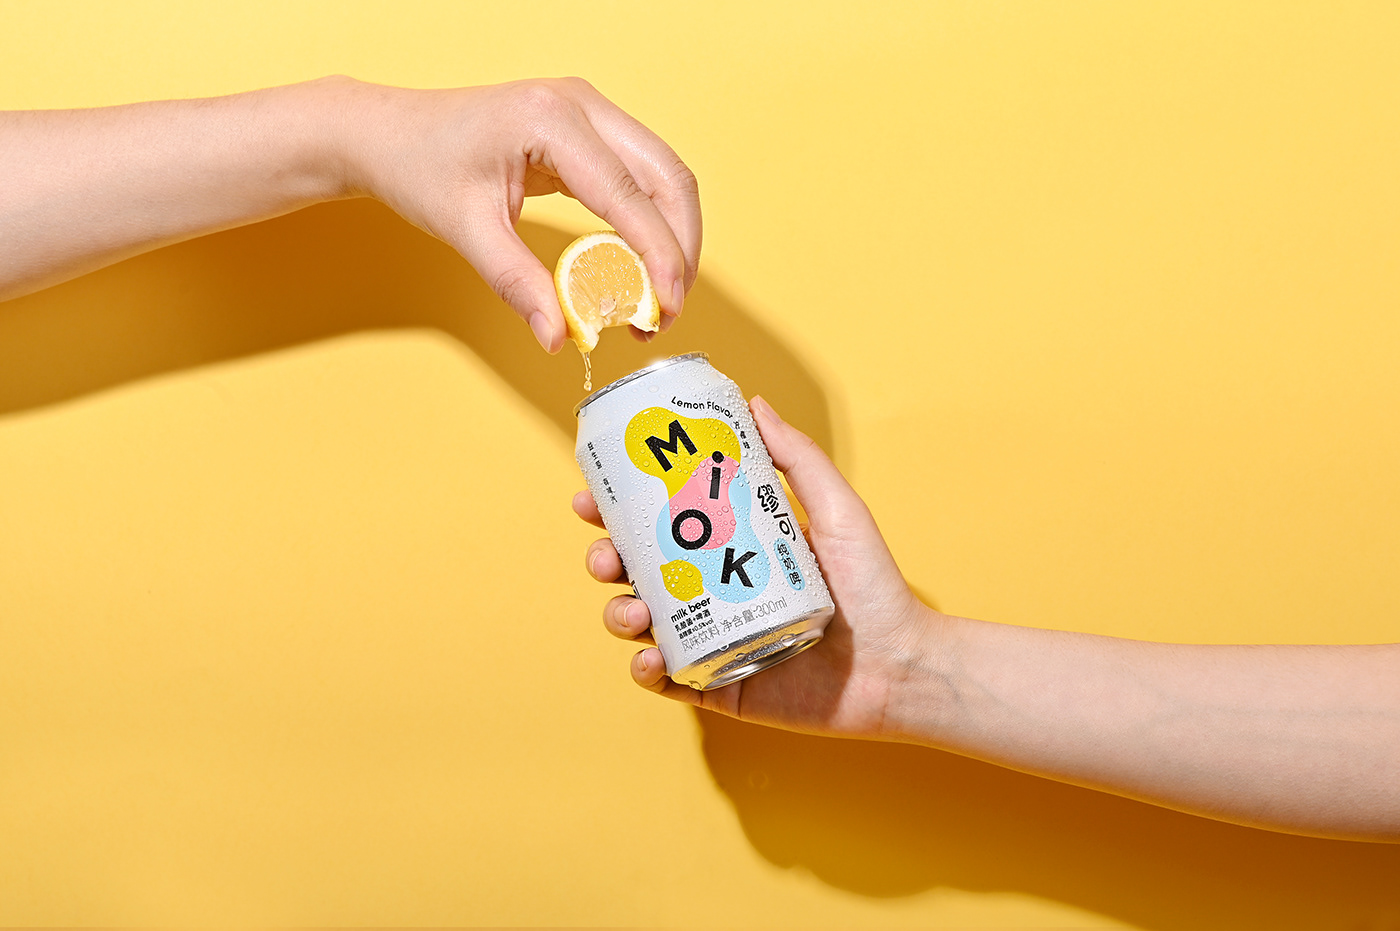 beer brand identity can design drink logo milk Packaging